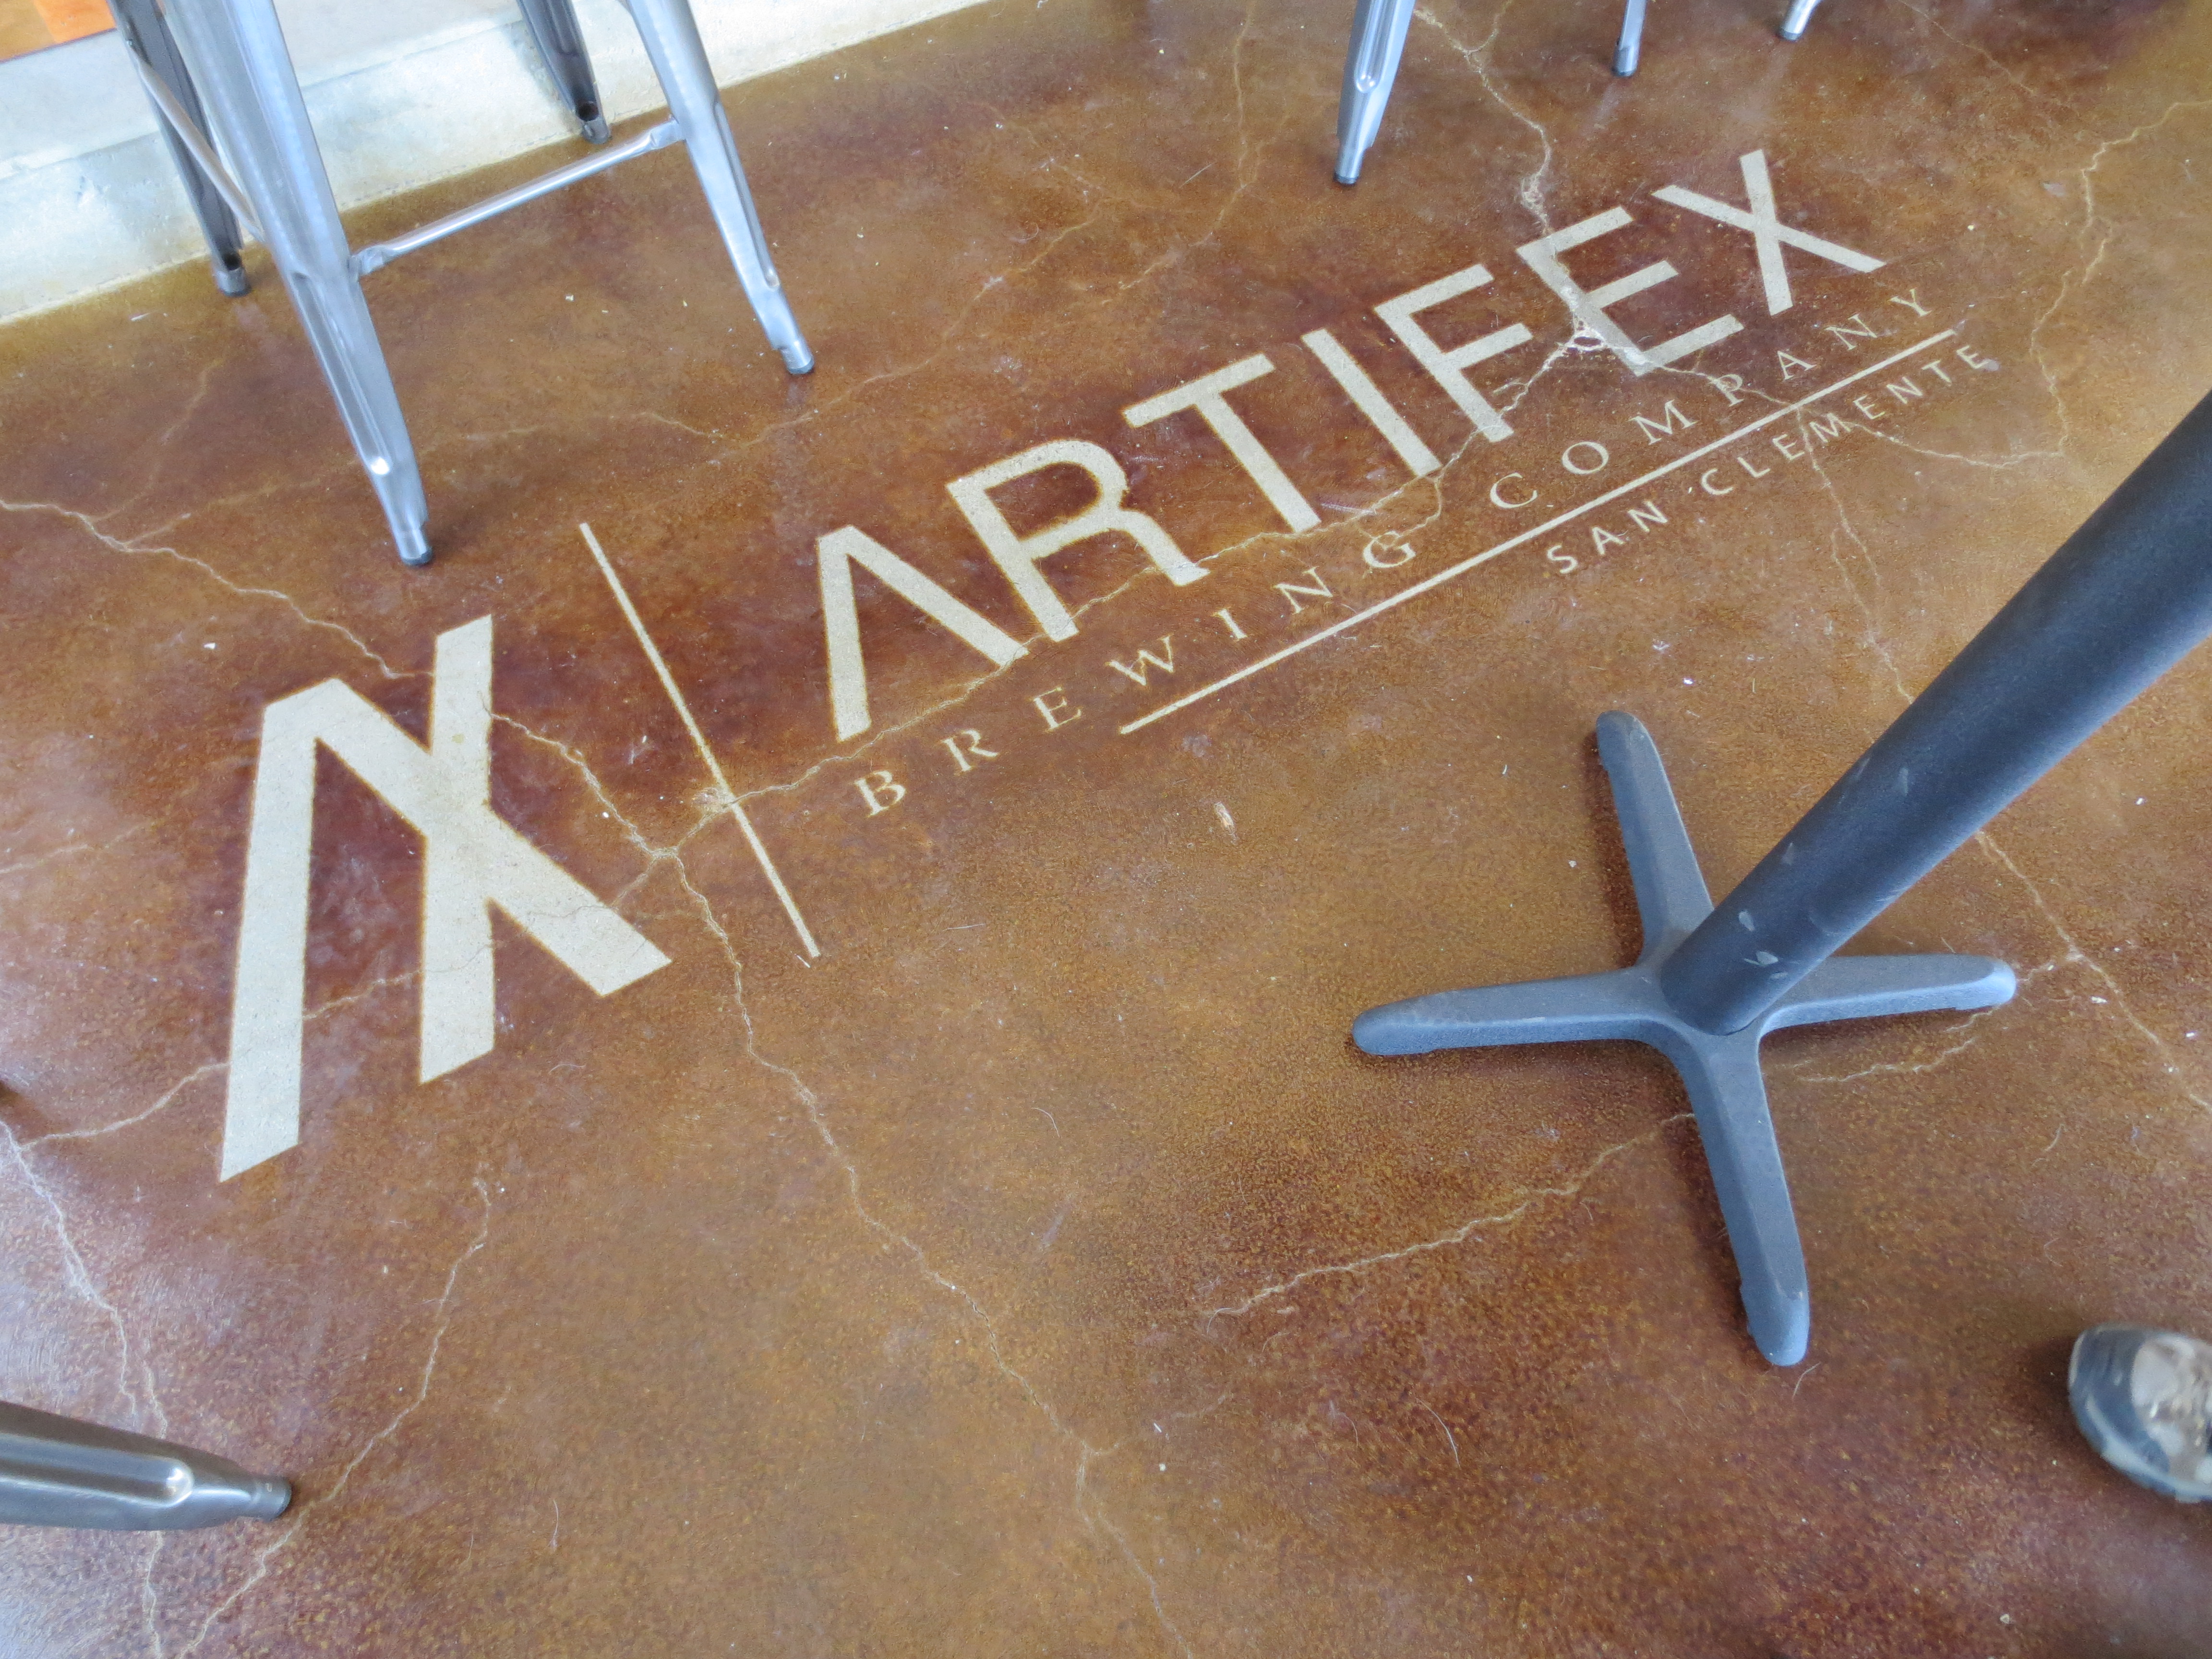 A Great Start for Artifex Brewing! @artifexbrewing